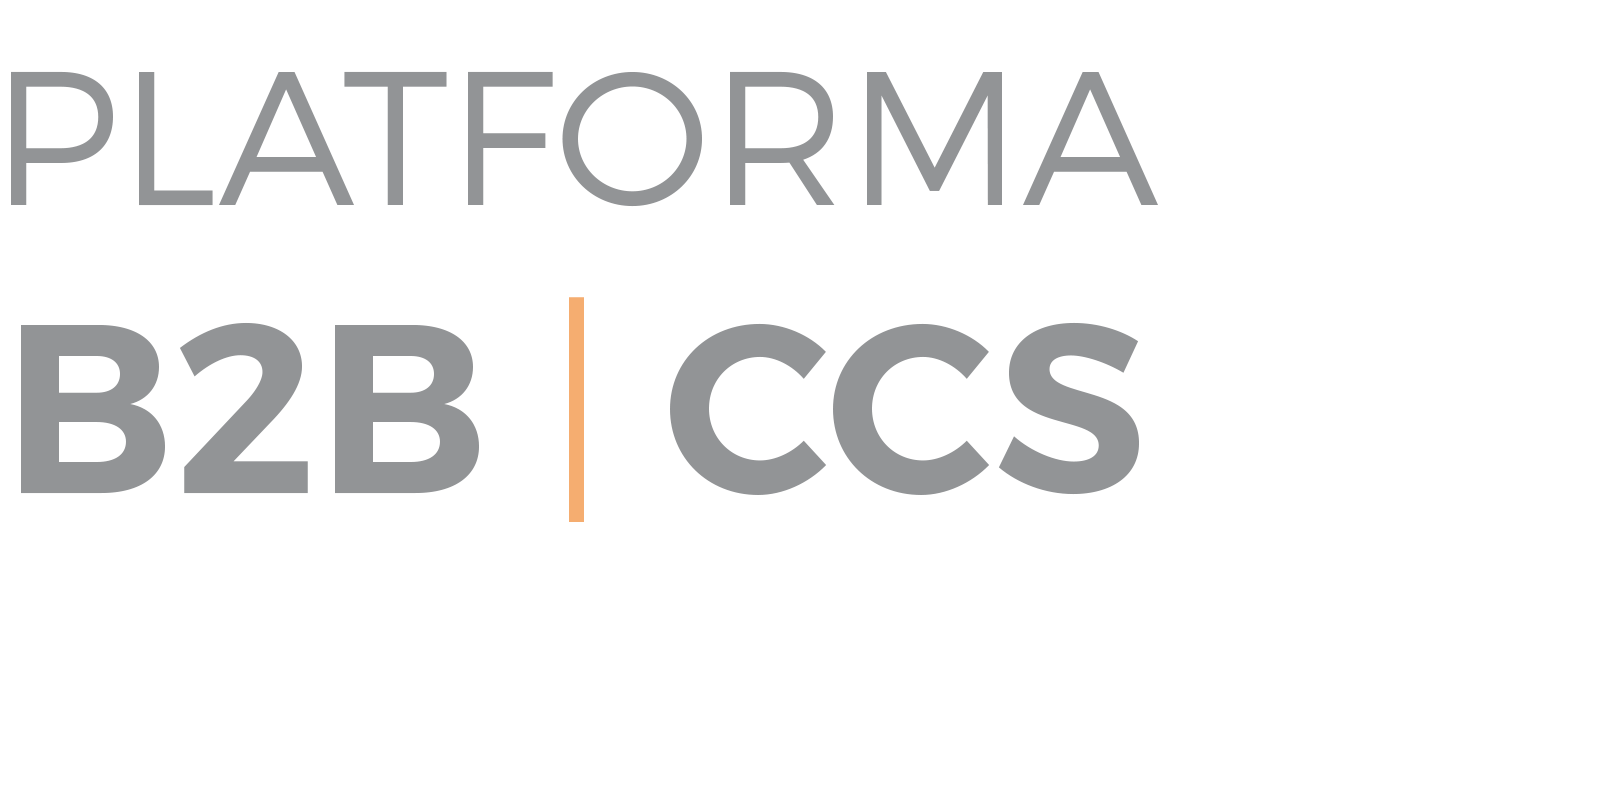 Platforma B2B | CCS